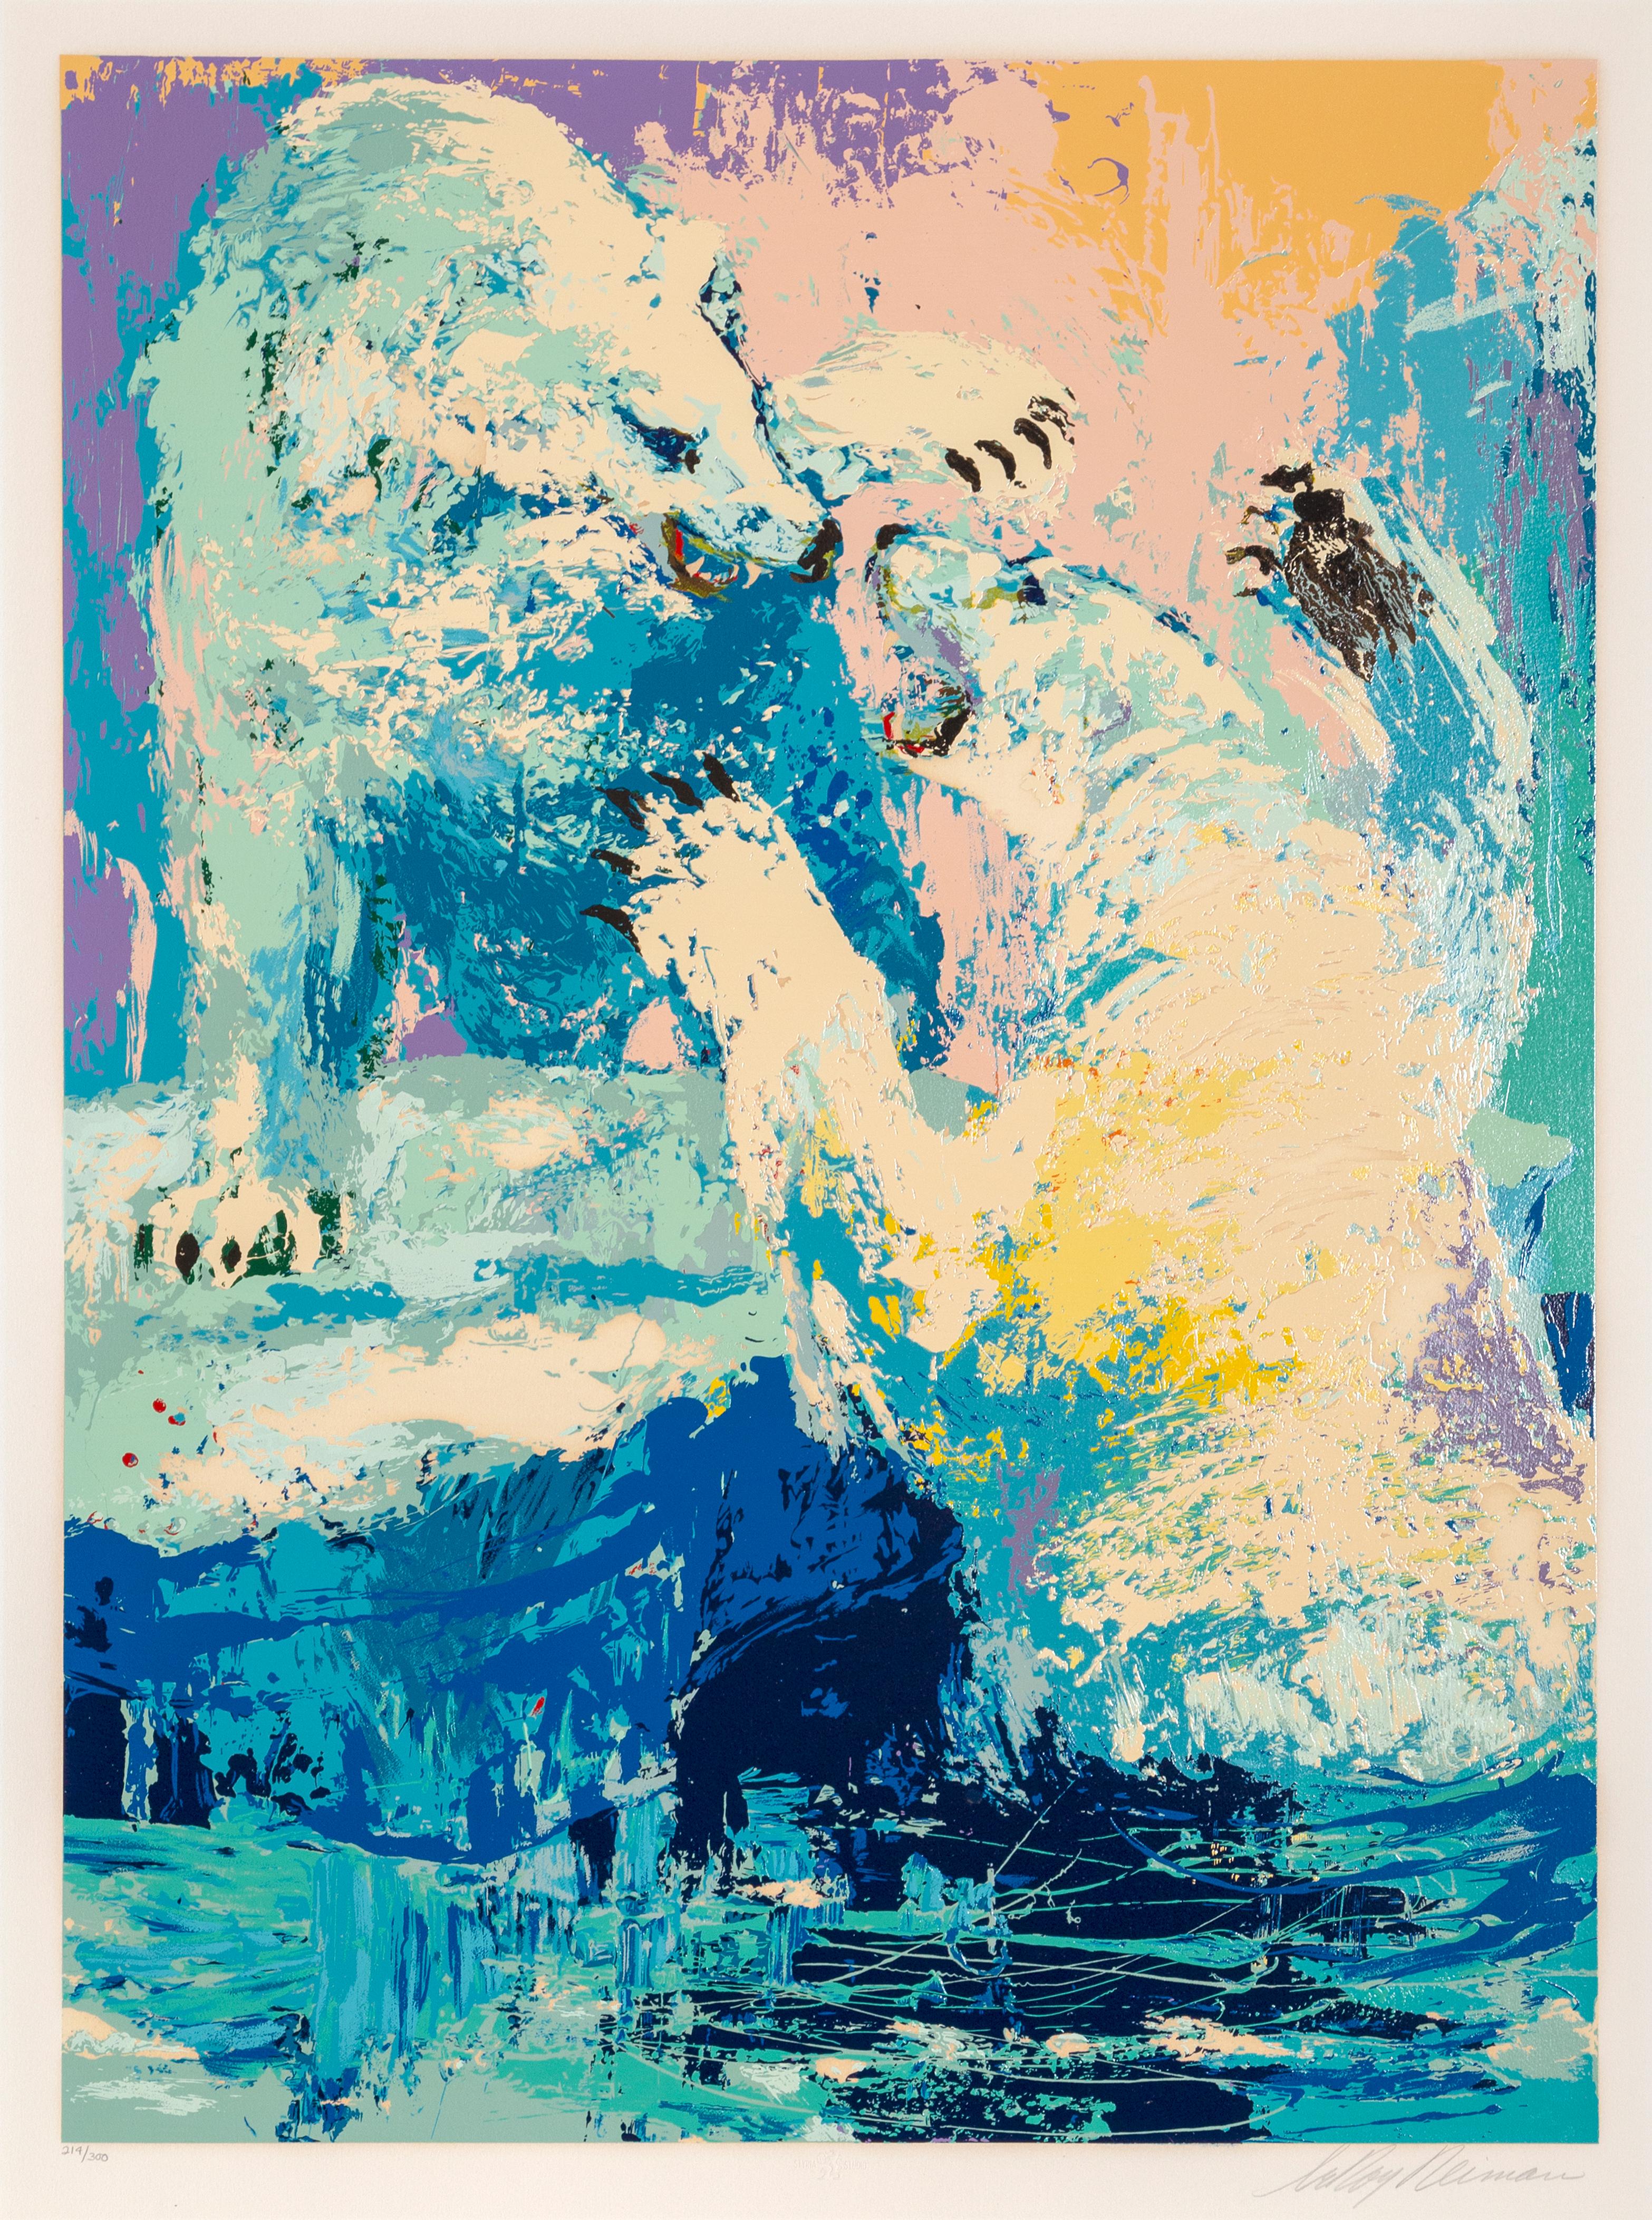 Polar bear at night by Goed Blauw Acrylic print 20 x 30 cm 